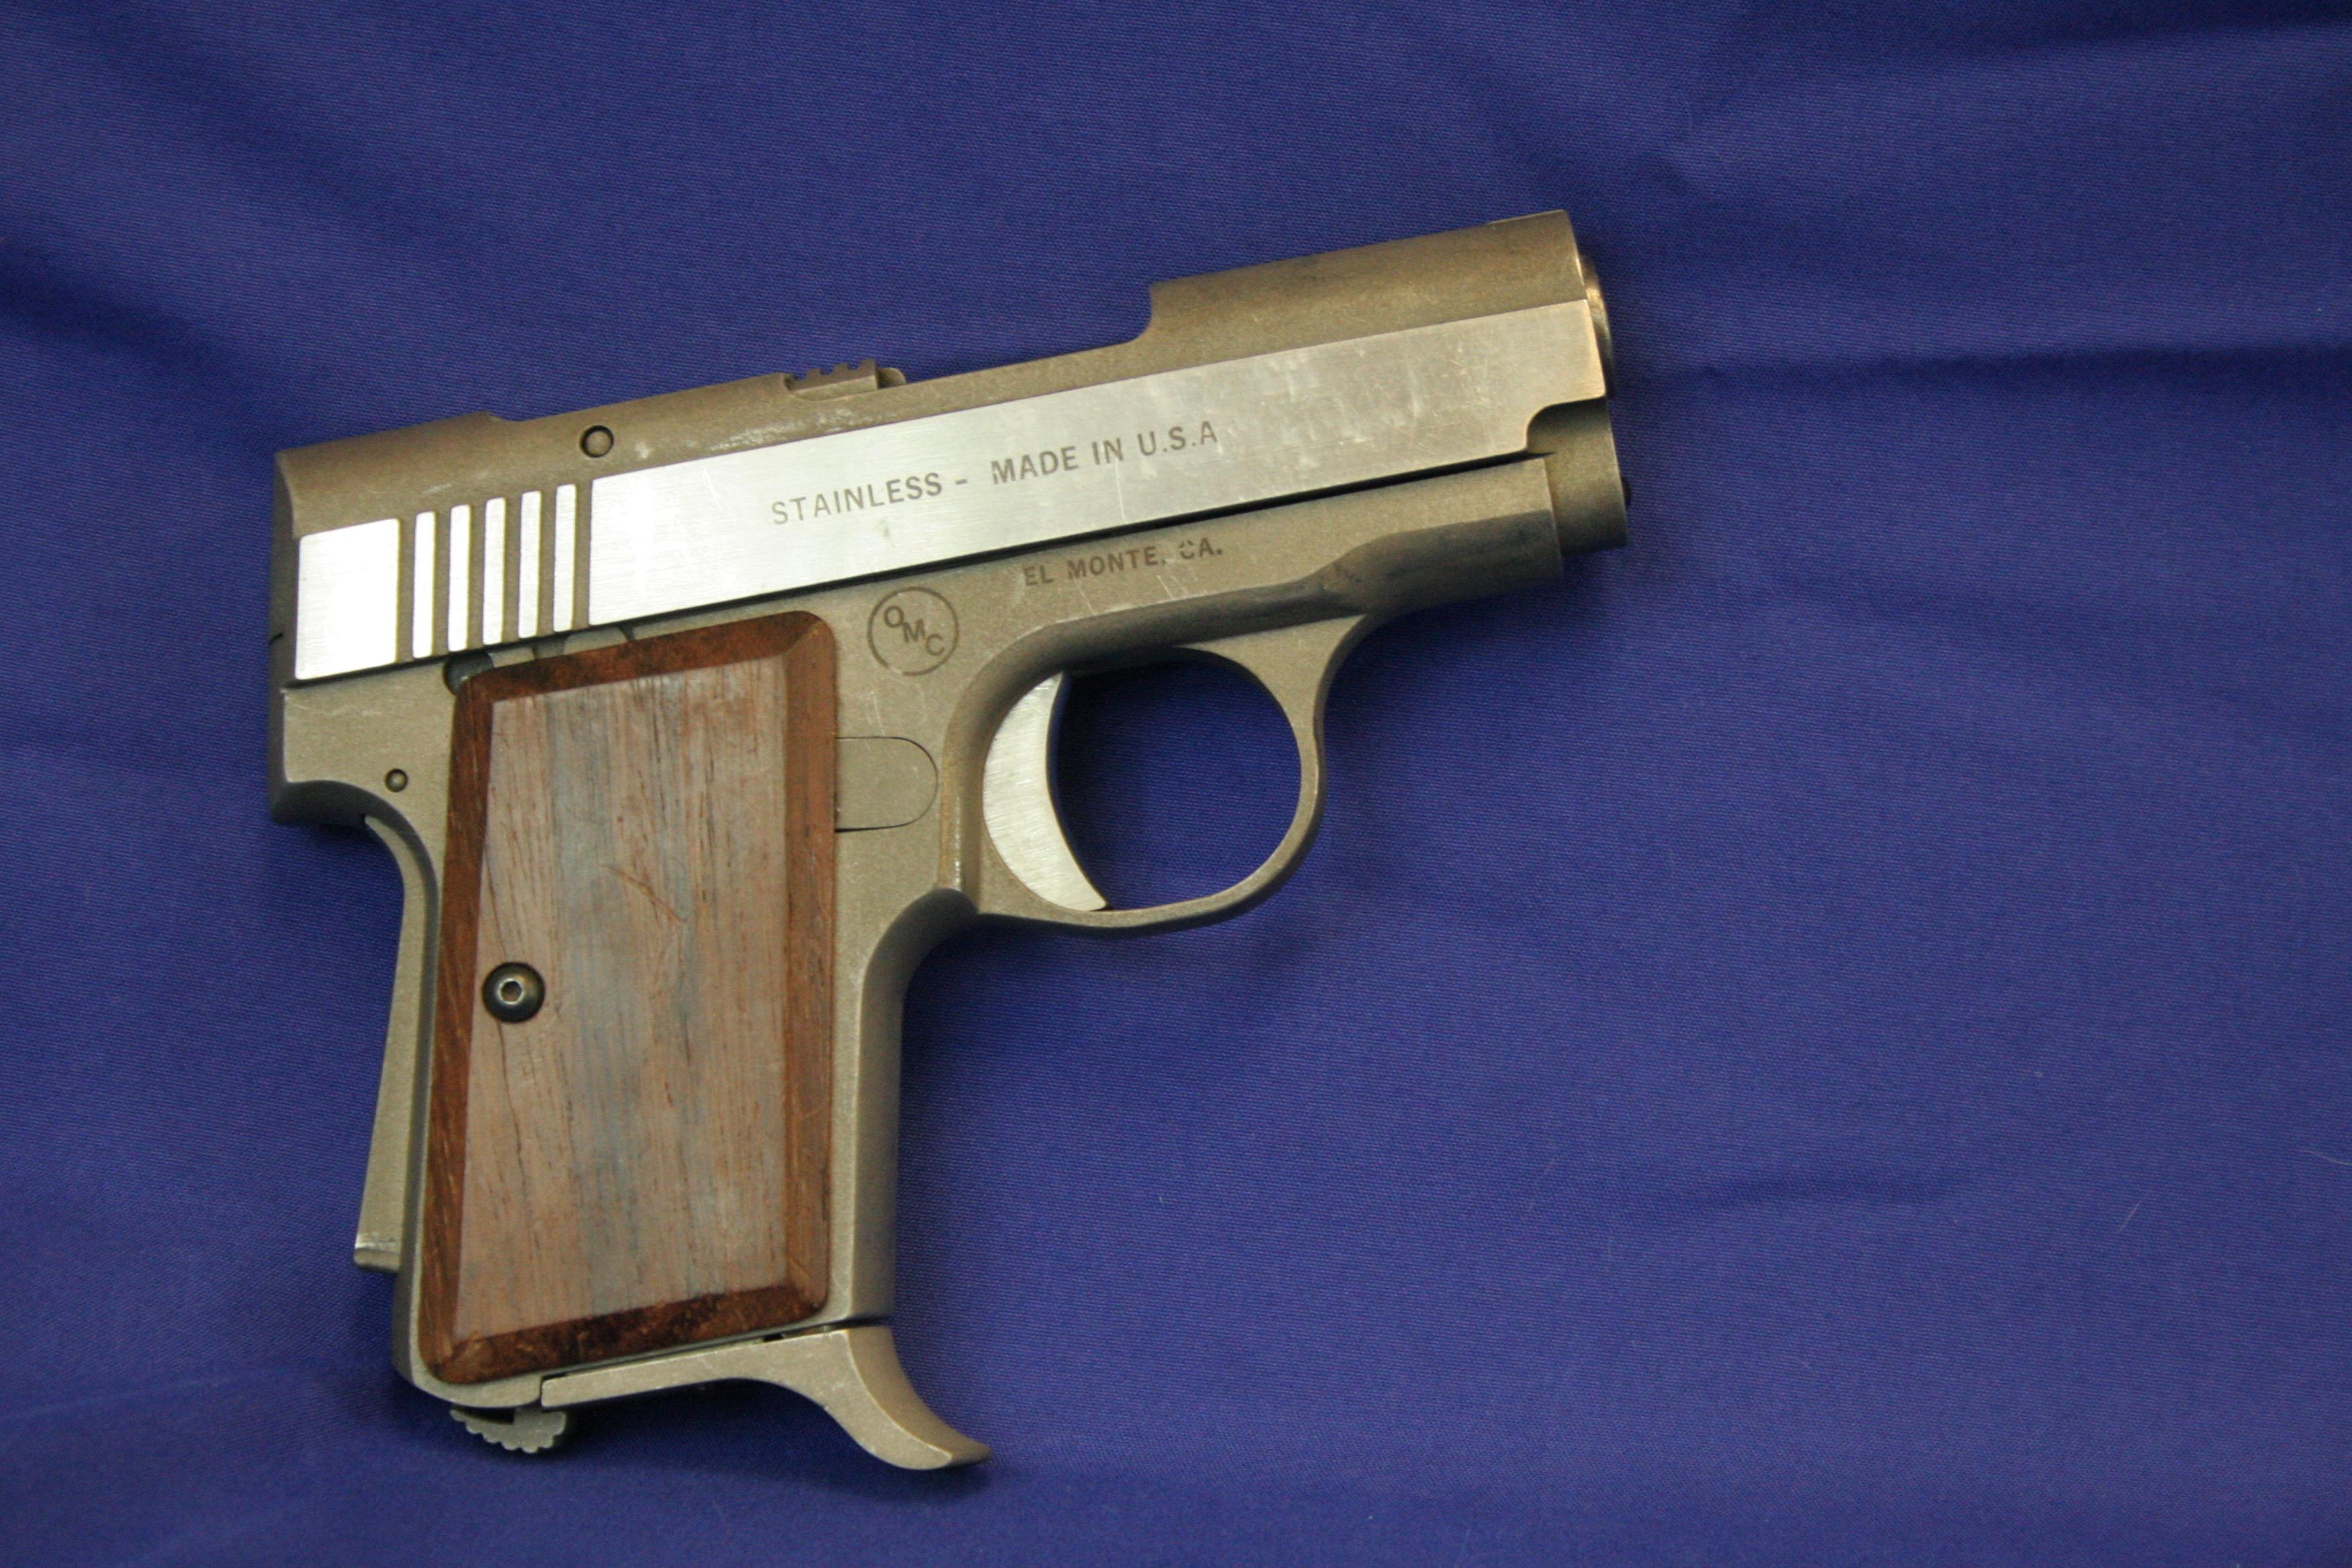 Omc Backup Pistol Cal .380acp/9mm Kurz Sn:e02953 ... Not Legal In Ca